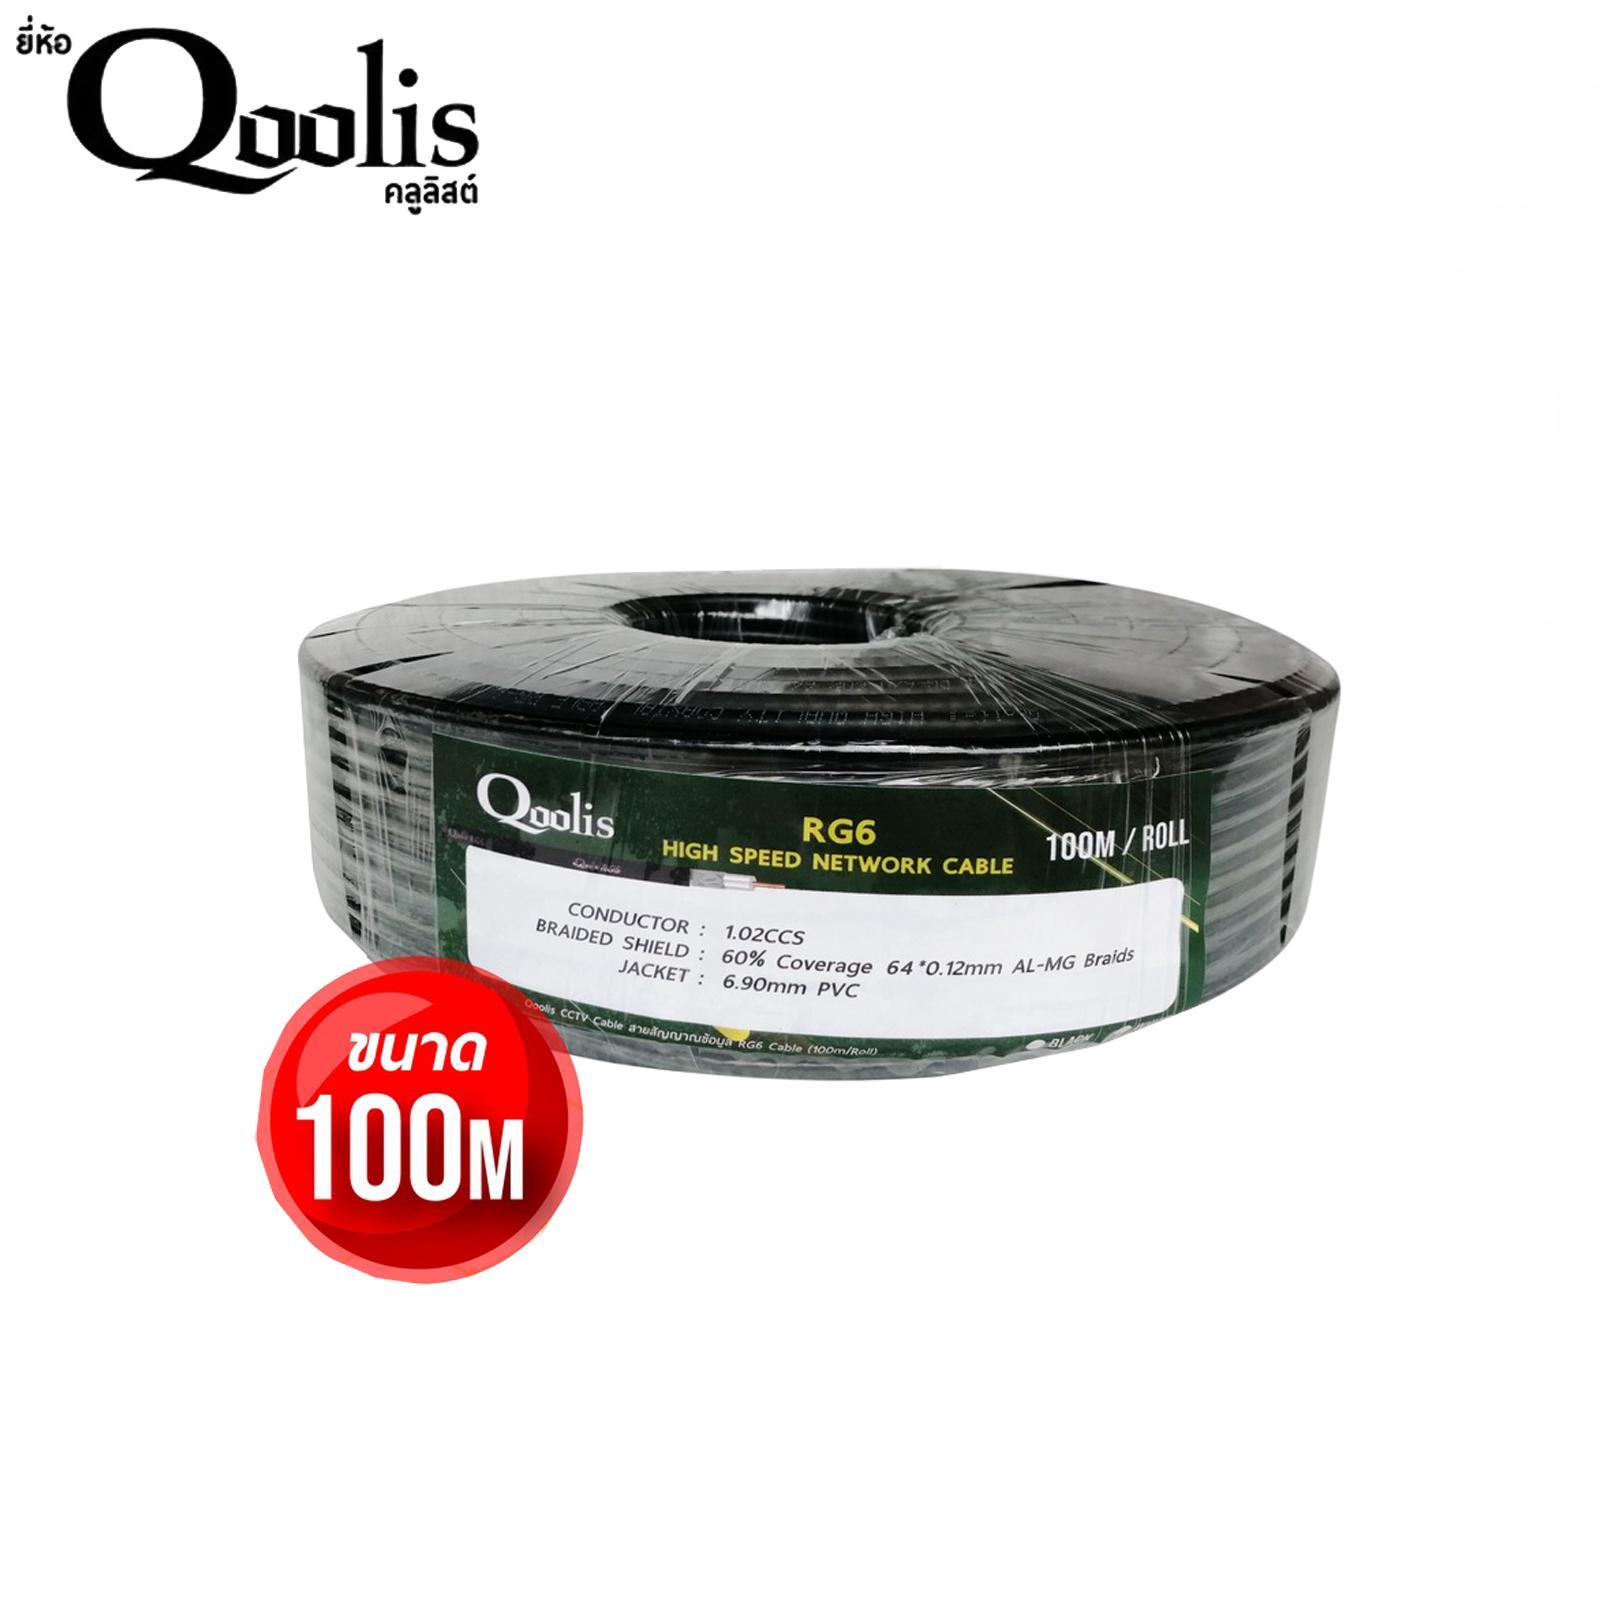 Qoolis RG6 100